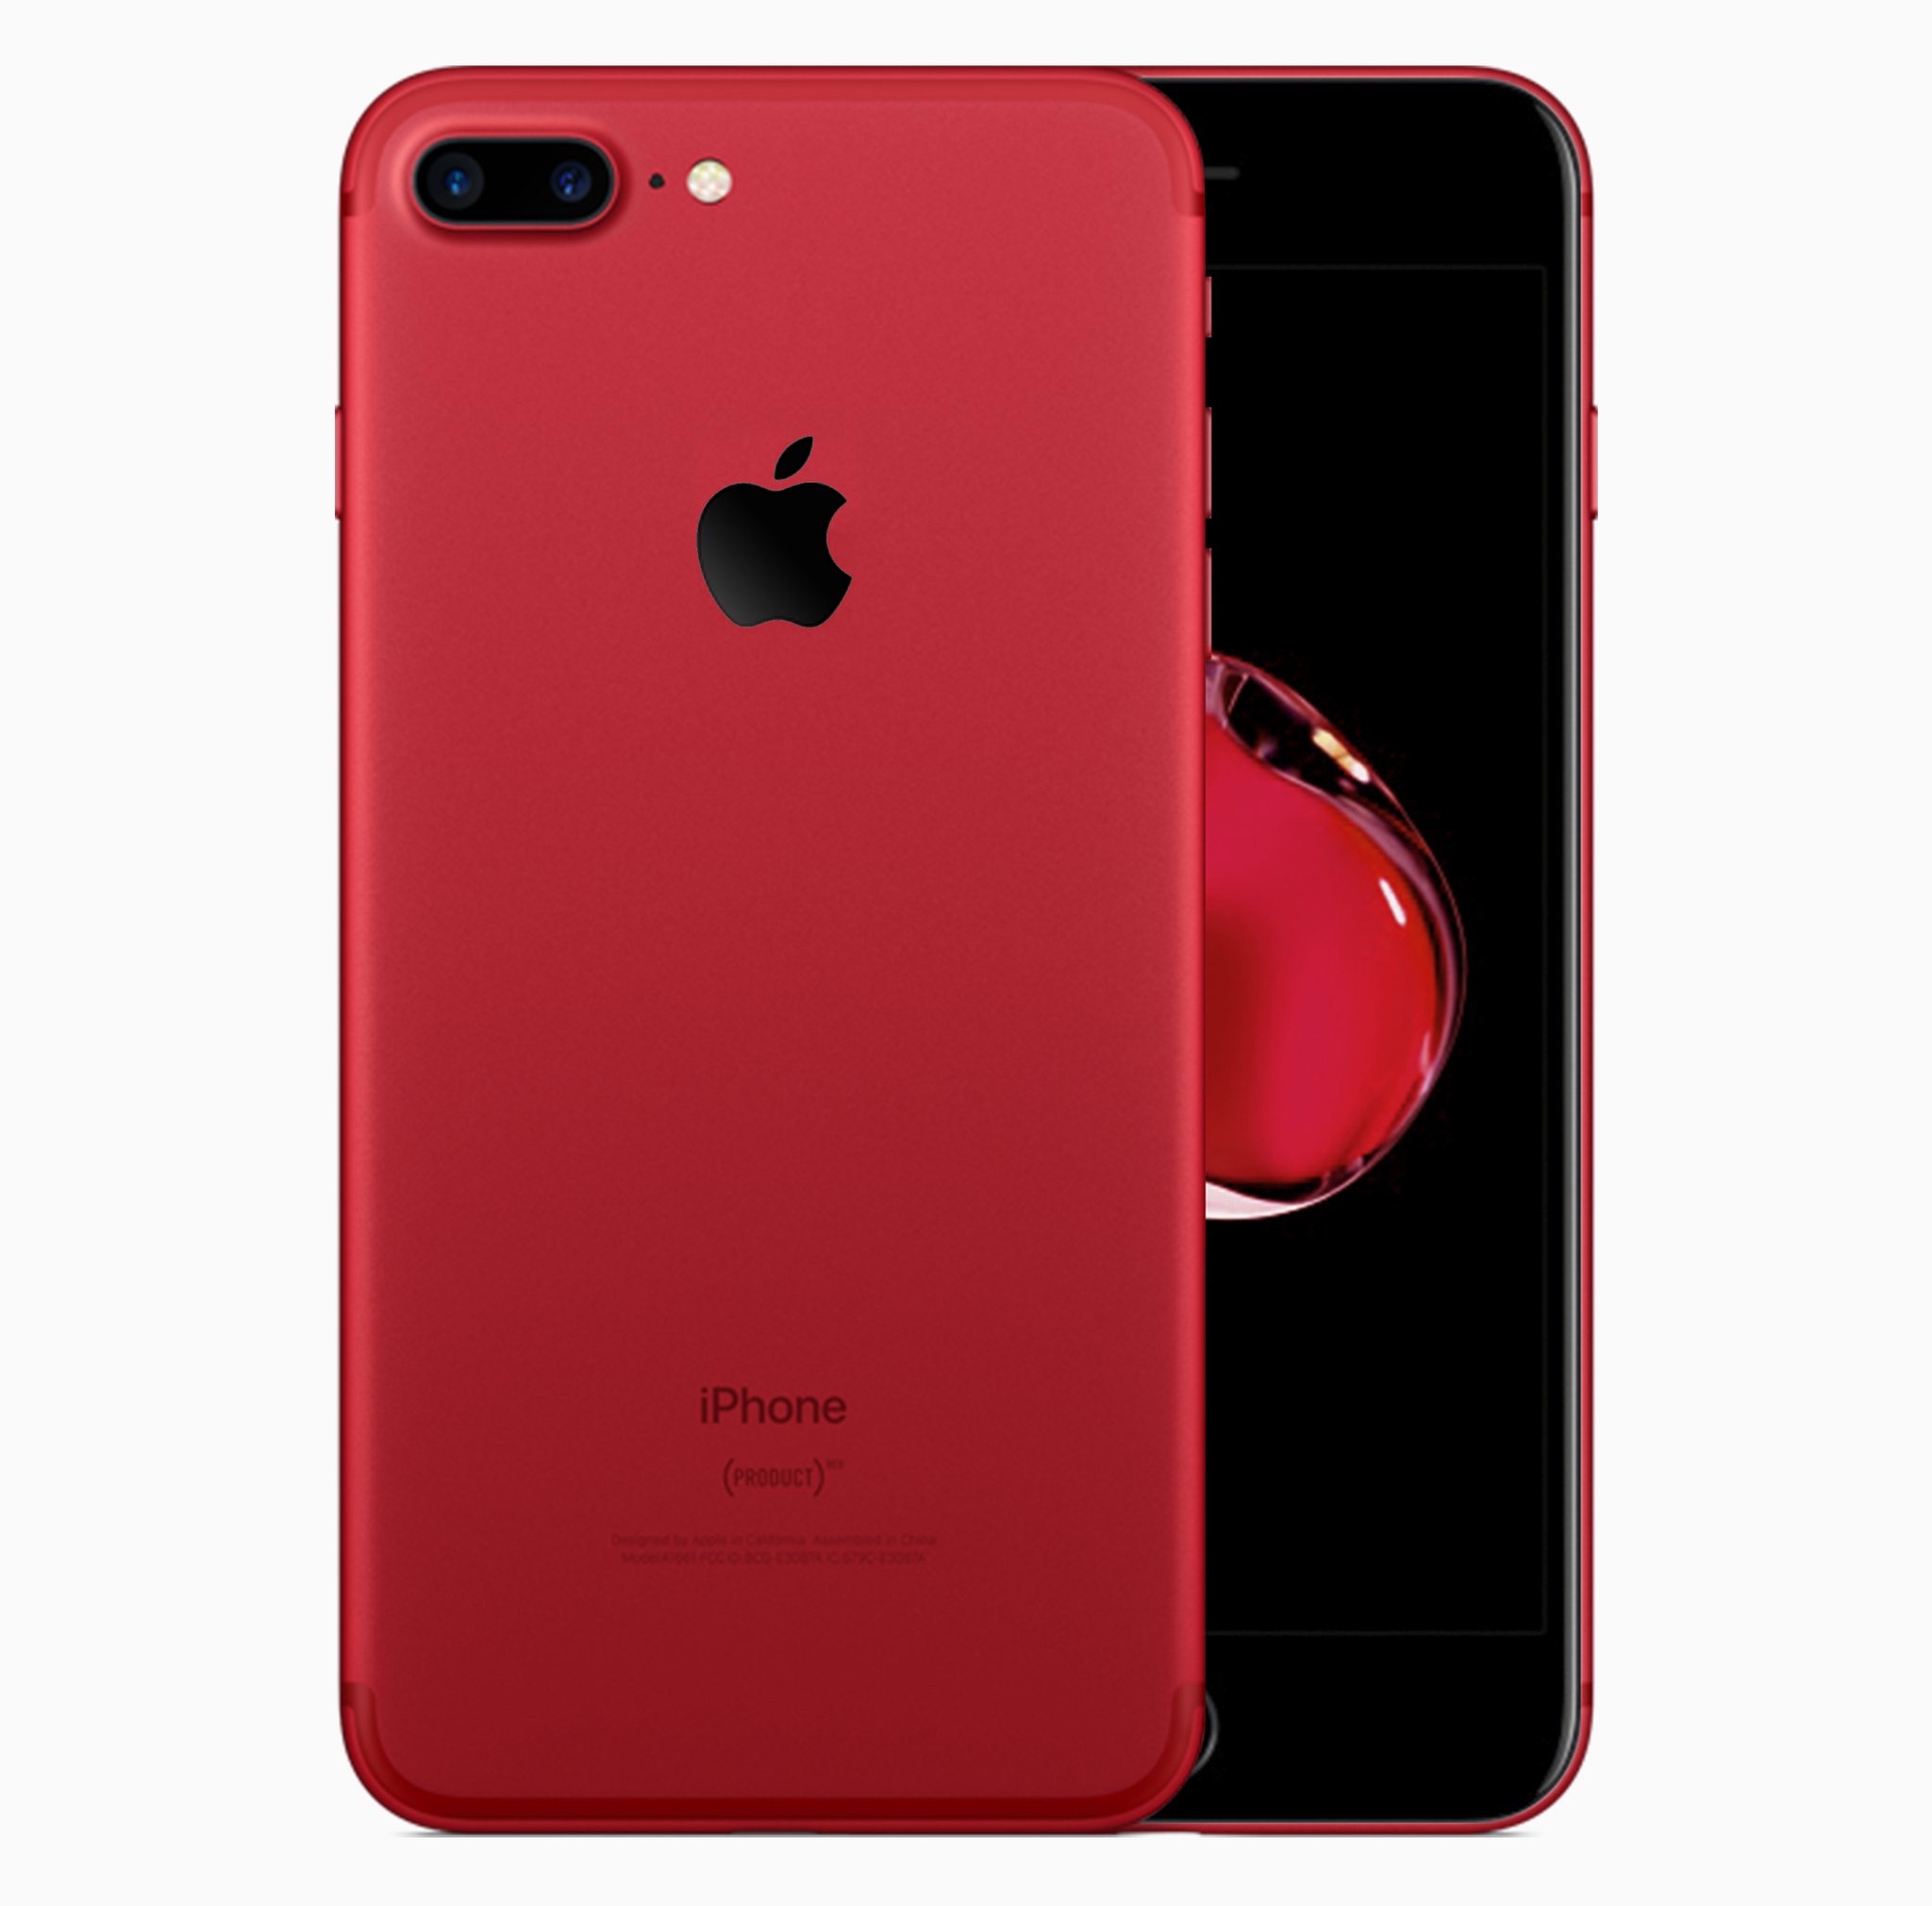 Плюс 7. Iphone 7 Plus 128gb Red. Apple iphone 7 128gb Red. Айфон 7 плюс 128 ГБ красный. Iphone 7 Plus 32gb Red.